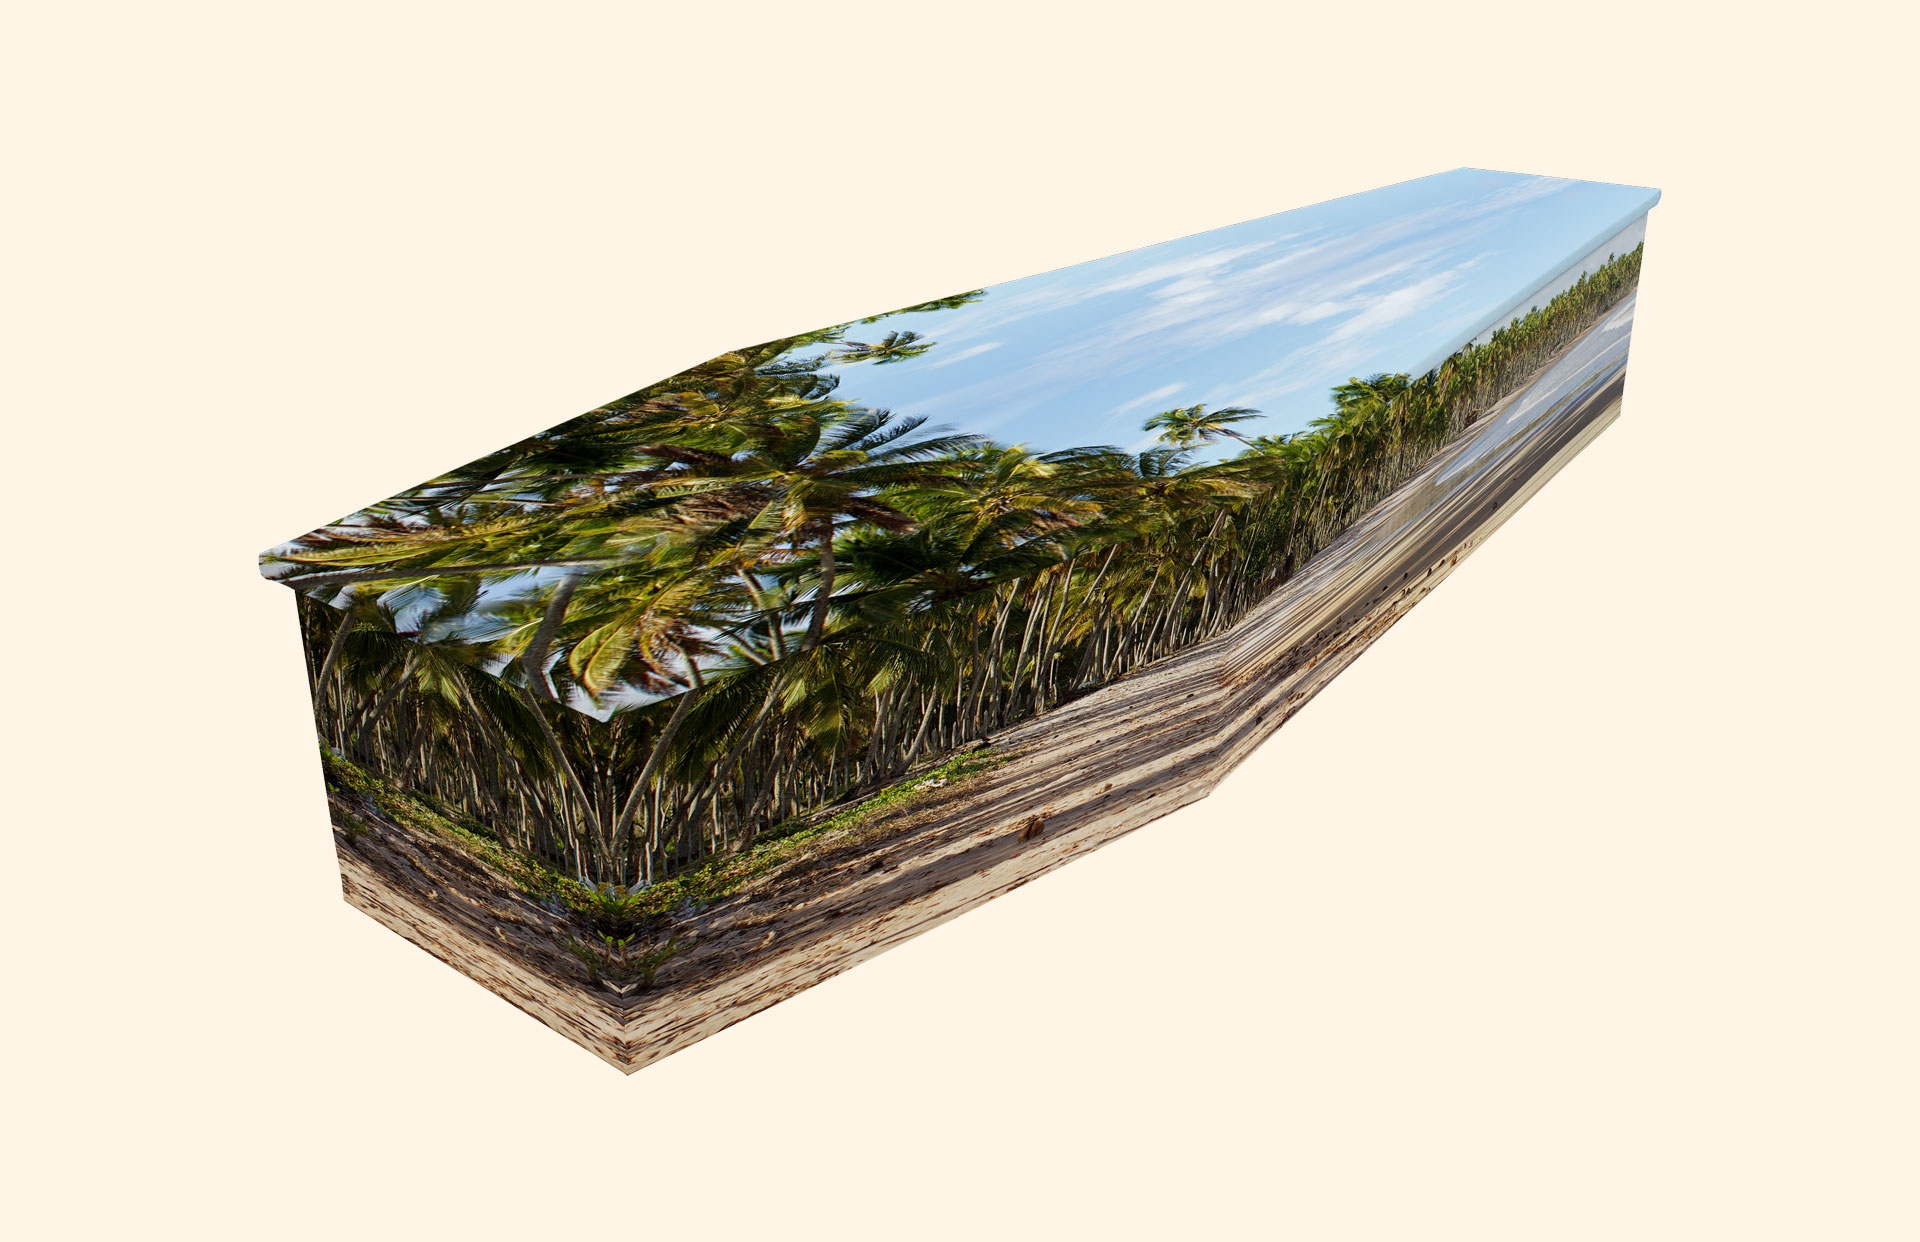 Paradise design on a cardboard coffin